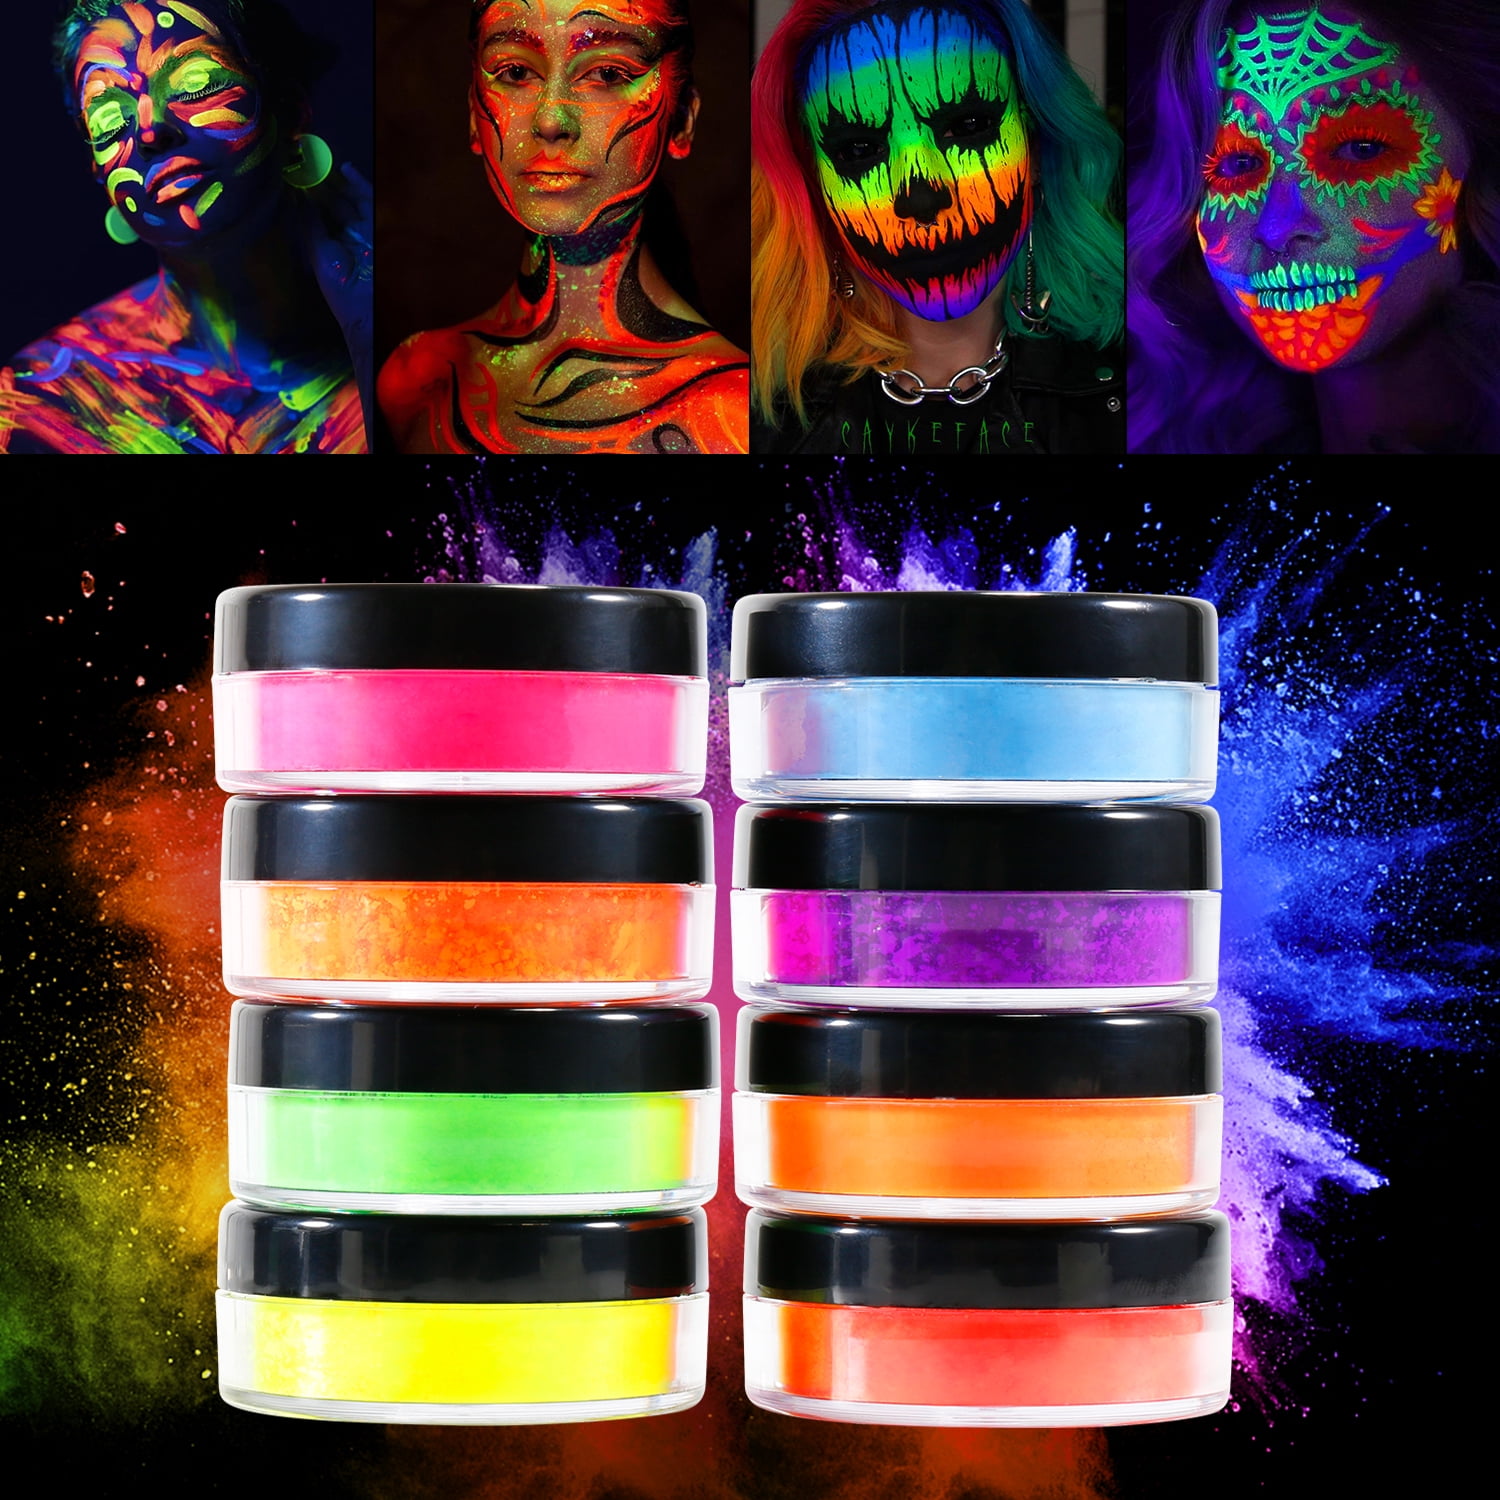 NEON PIGMENTS STACK of 6 Colors, Eyeshadows, Pigment Shadows, Neon Colors, Glow  in the Dark Makeup, Glow, Festival, Fantasy, Neon Cosmetics 